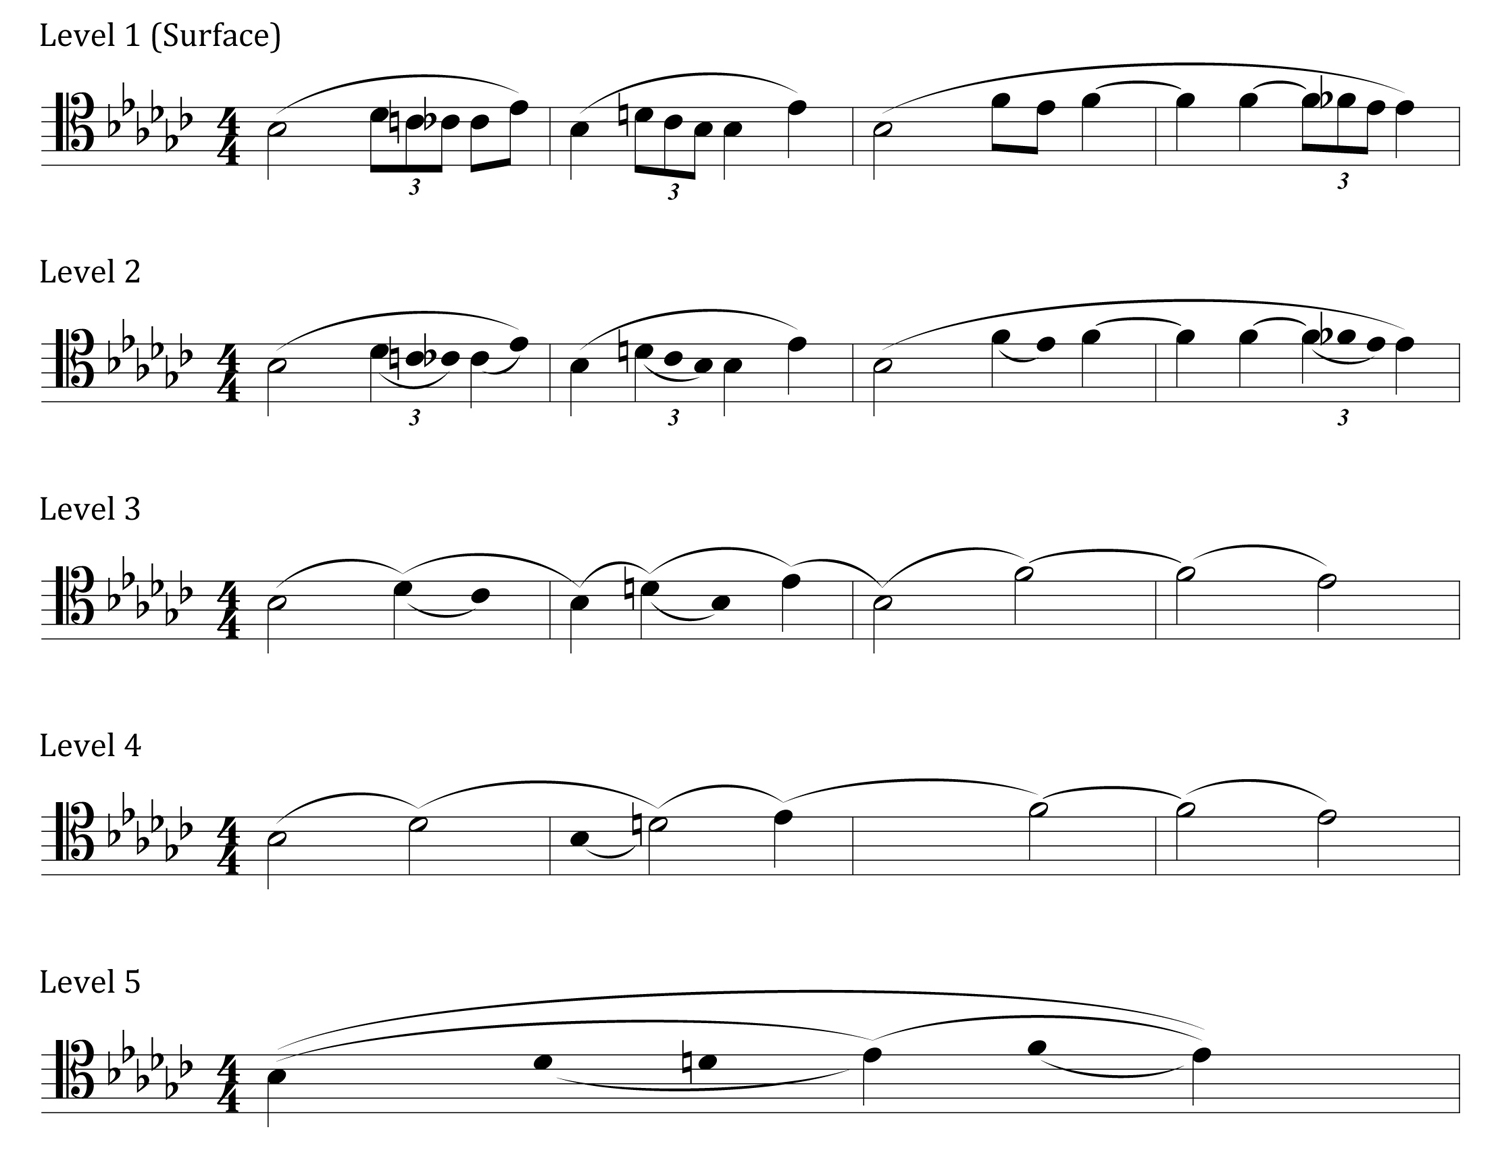 Melody In F - Anton Rubinstein (Trumpet).pdf (arr. Digital Book Music)  Sheet Music | Anton Rubinstein | Trumpet Solo